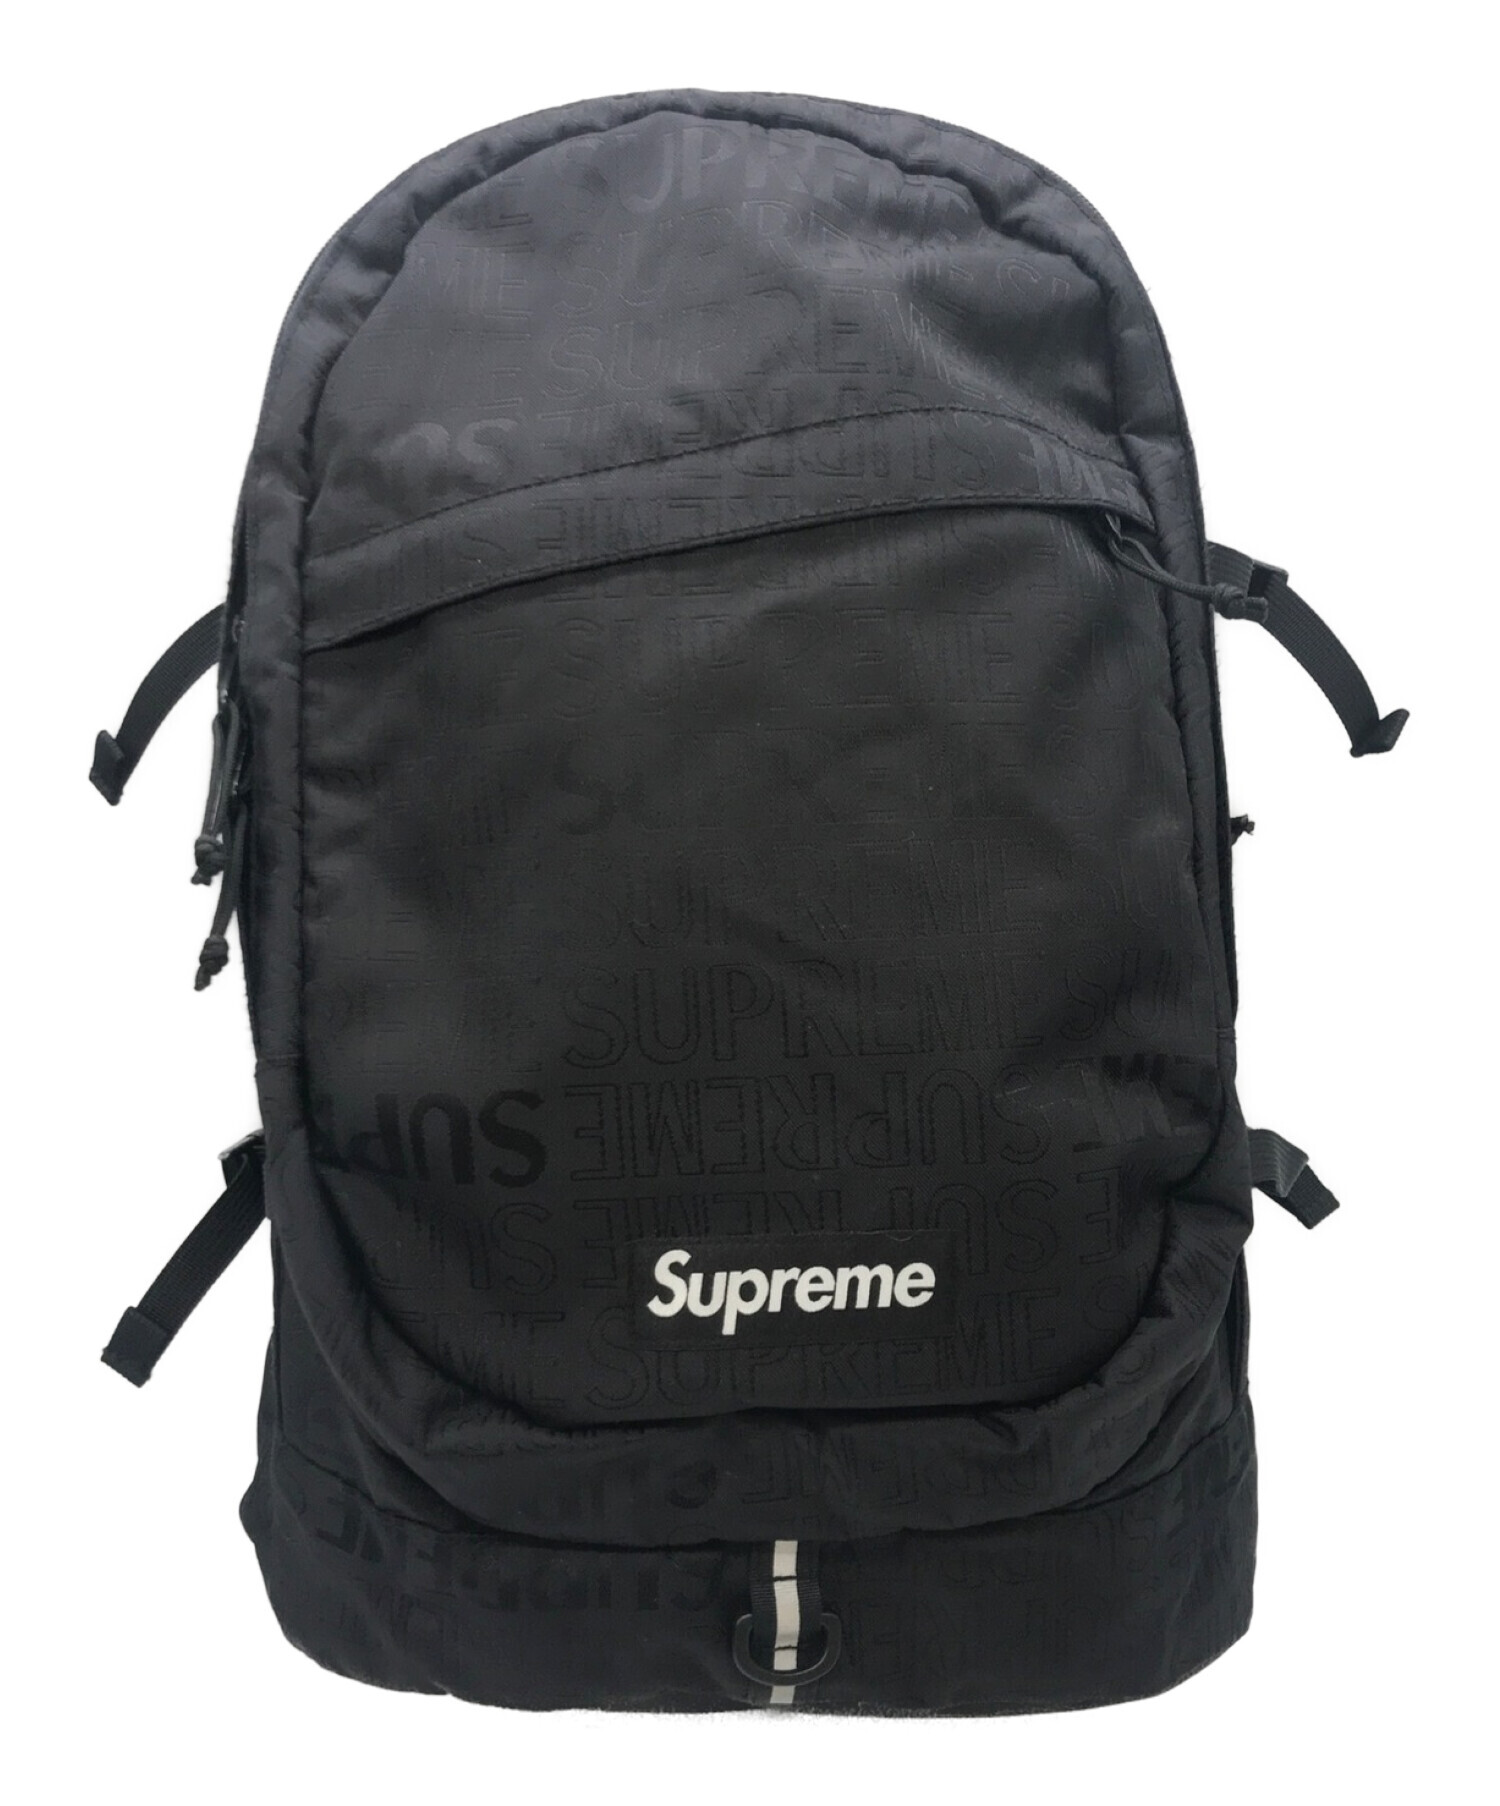 supreme 19ss backpack